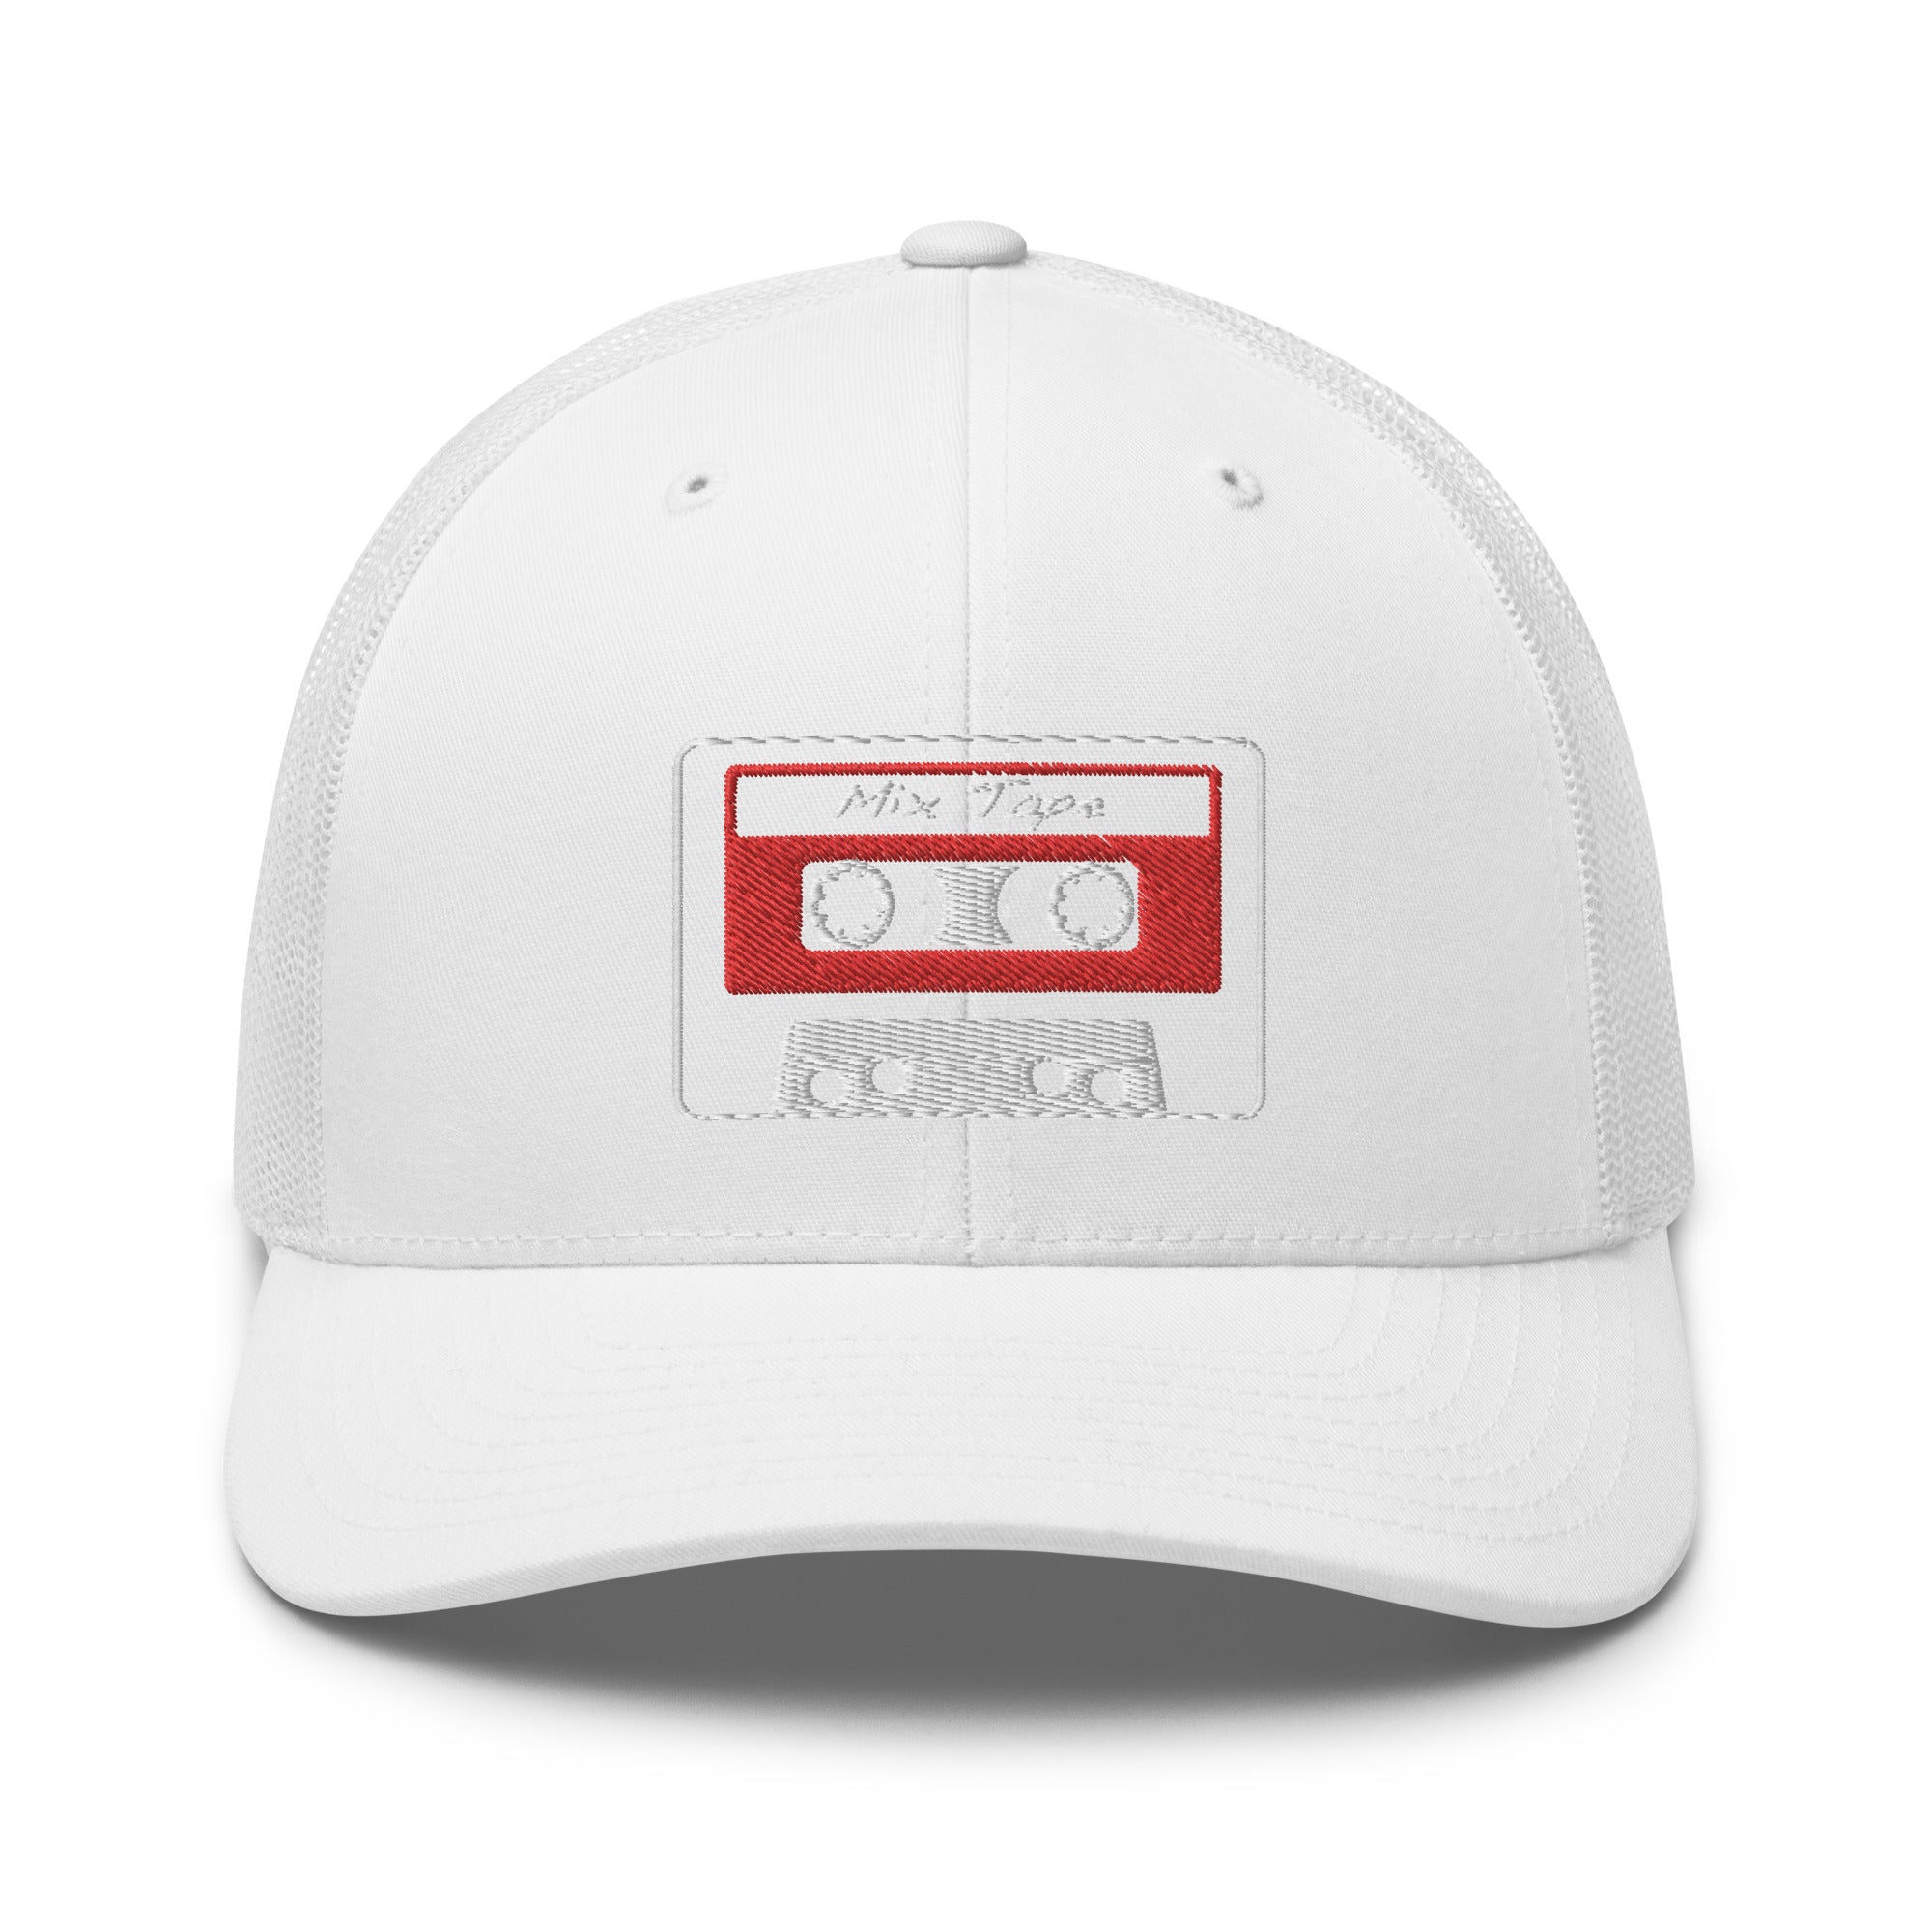 80's Style Retro Cassette Mix Tape Embroidered Retro Trucker Cap Snapback Hat